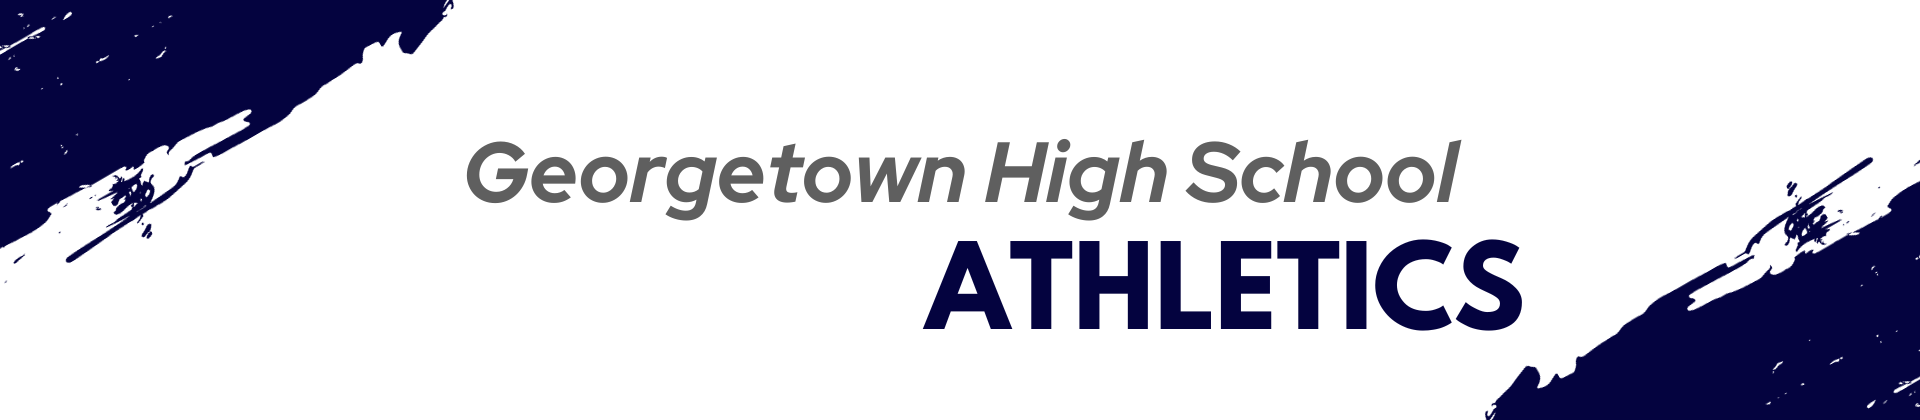 Georgetown County School District Athletics banner with dark green brush strokes